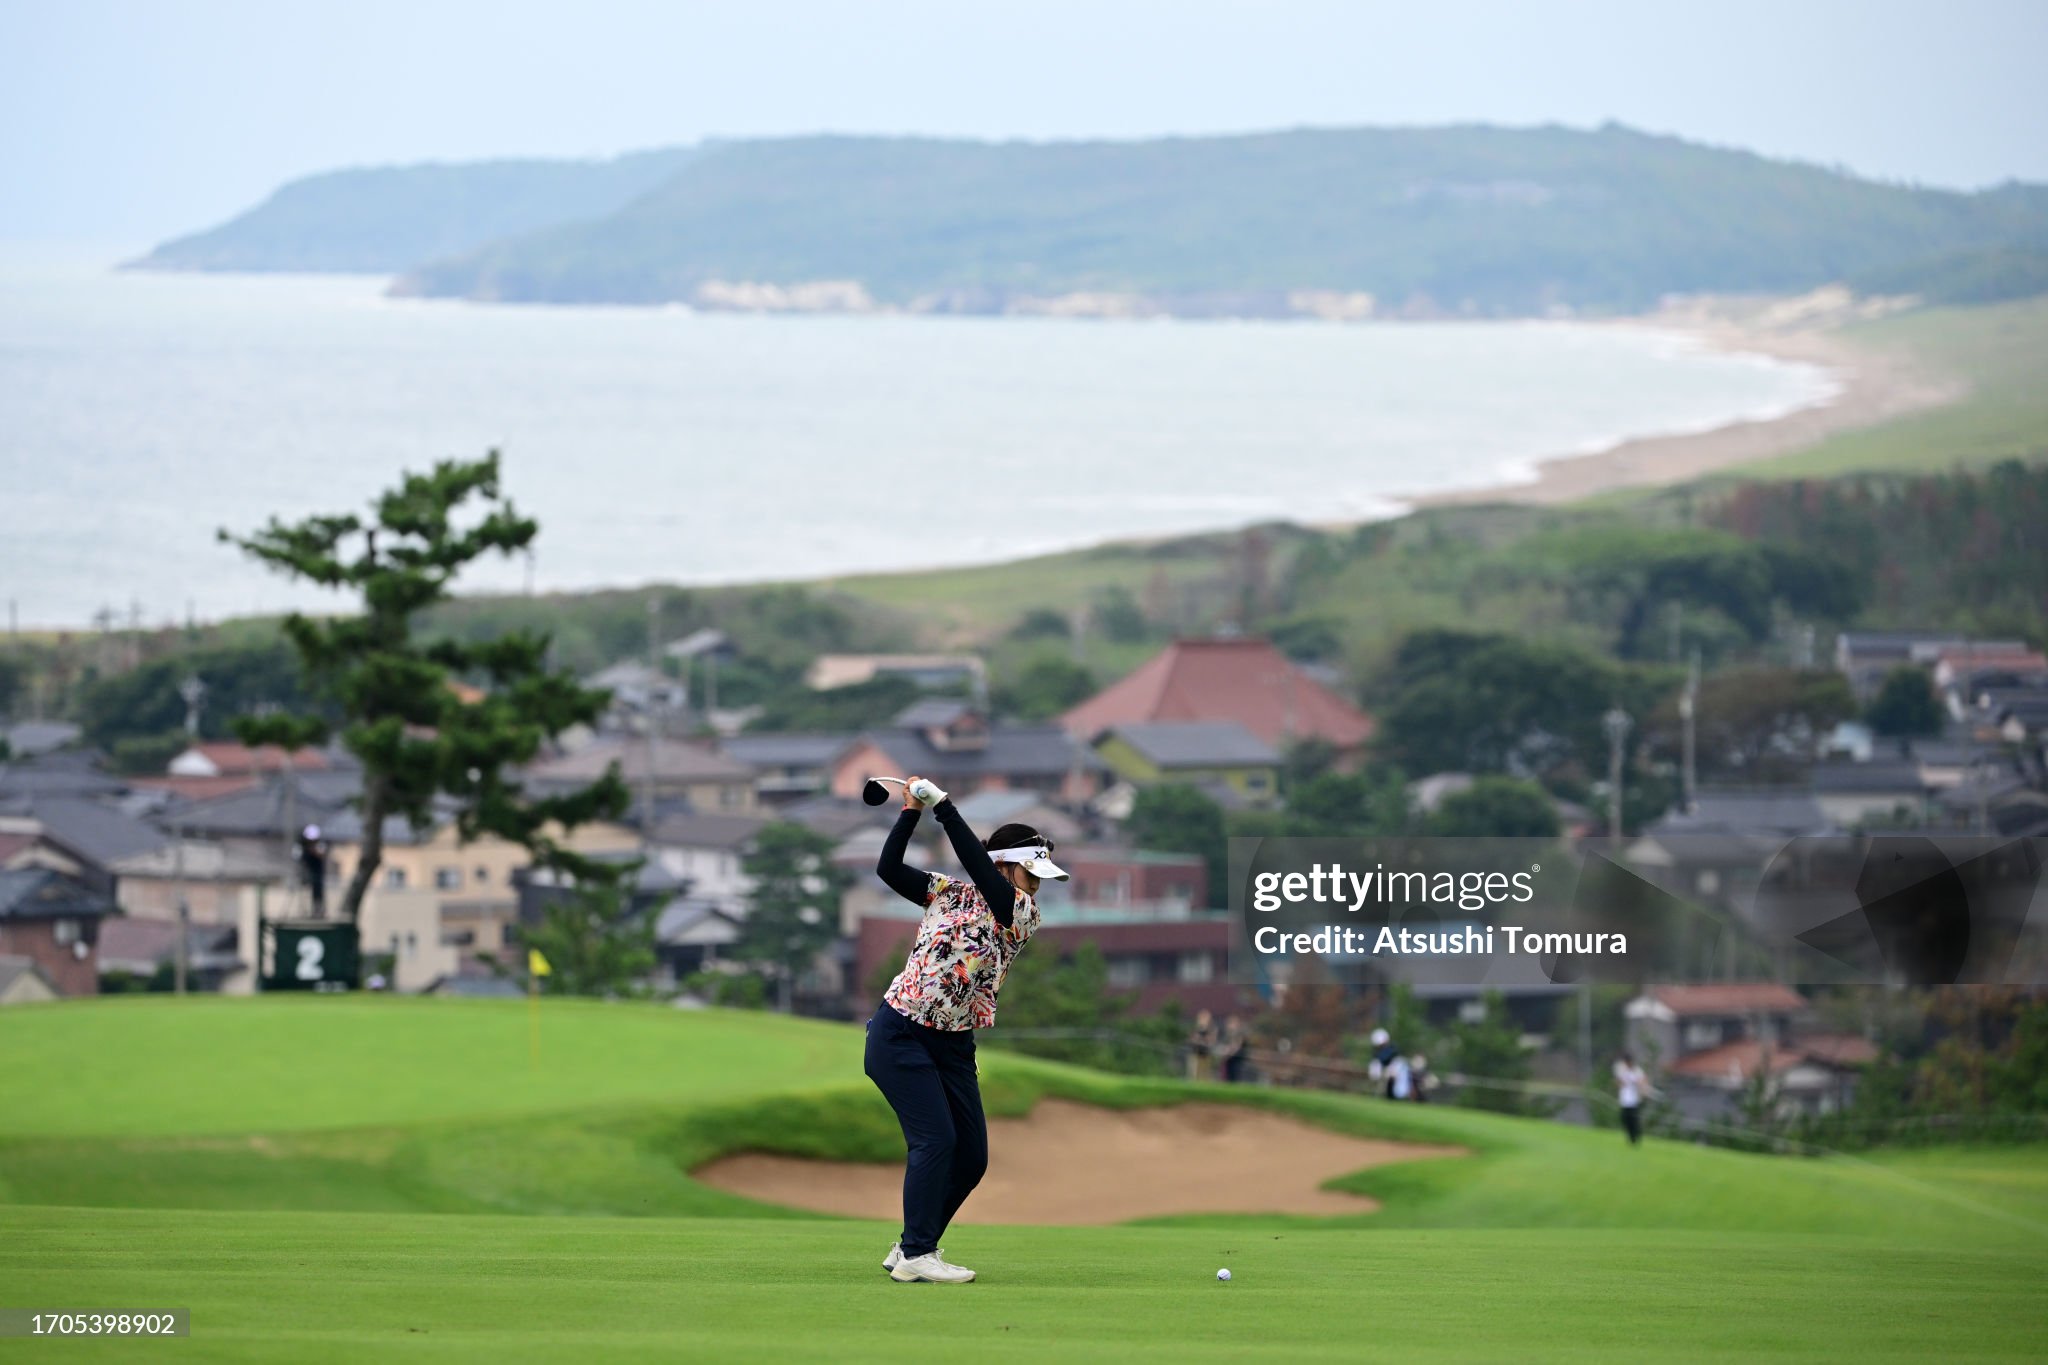 https://media.gettyimages.com/id/1705398902/photo/japan-womens-open-golf-championship-round-one.jpg?s=2048x2048&w=gi&k=20&c=51X7WcAxO7XMfmLoG3BKWbGV_RM9as2qaYOB9471wko=